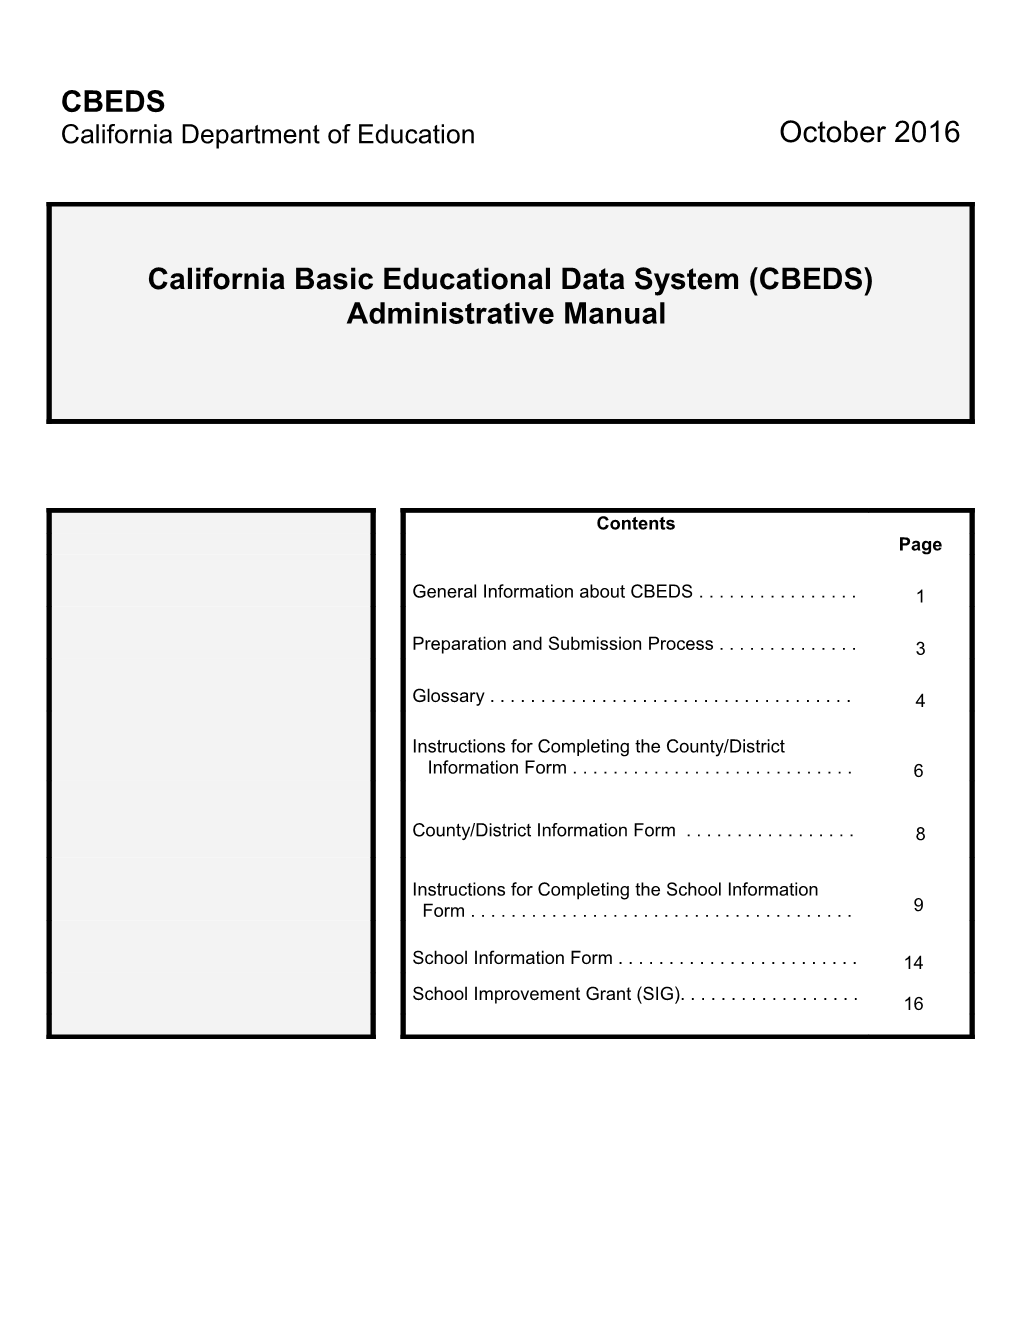 2016 CBEDS Administrative Manual - California Basic Educational Data System (CBEDS) (CA